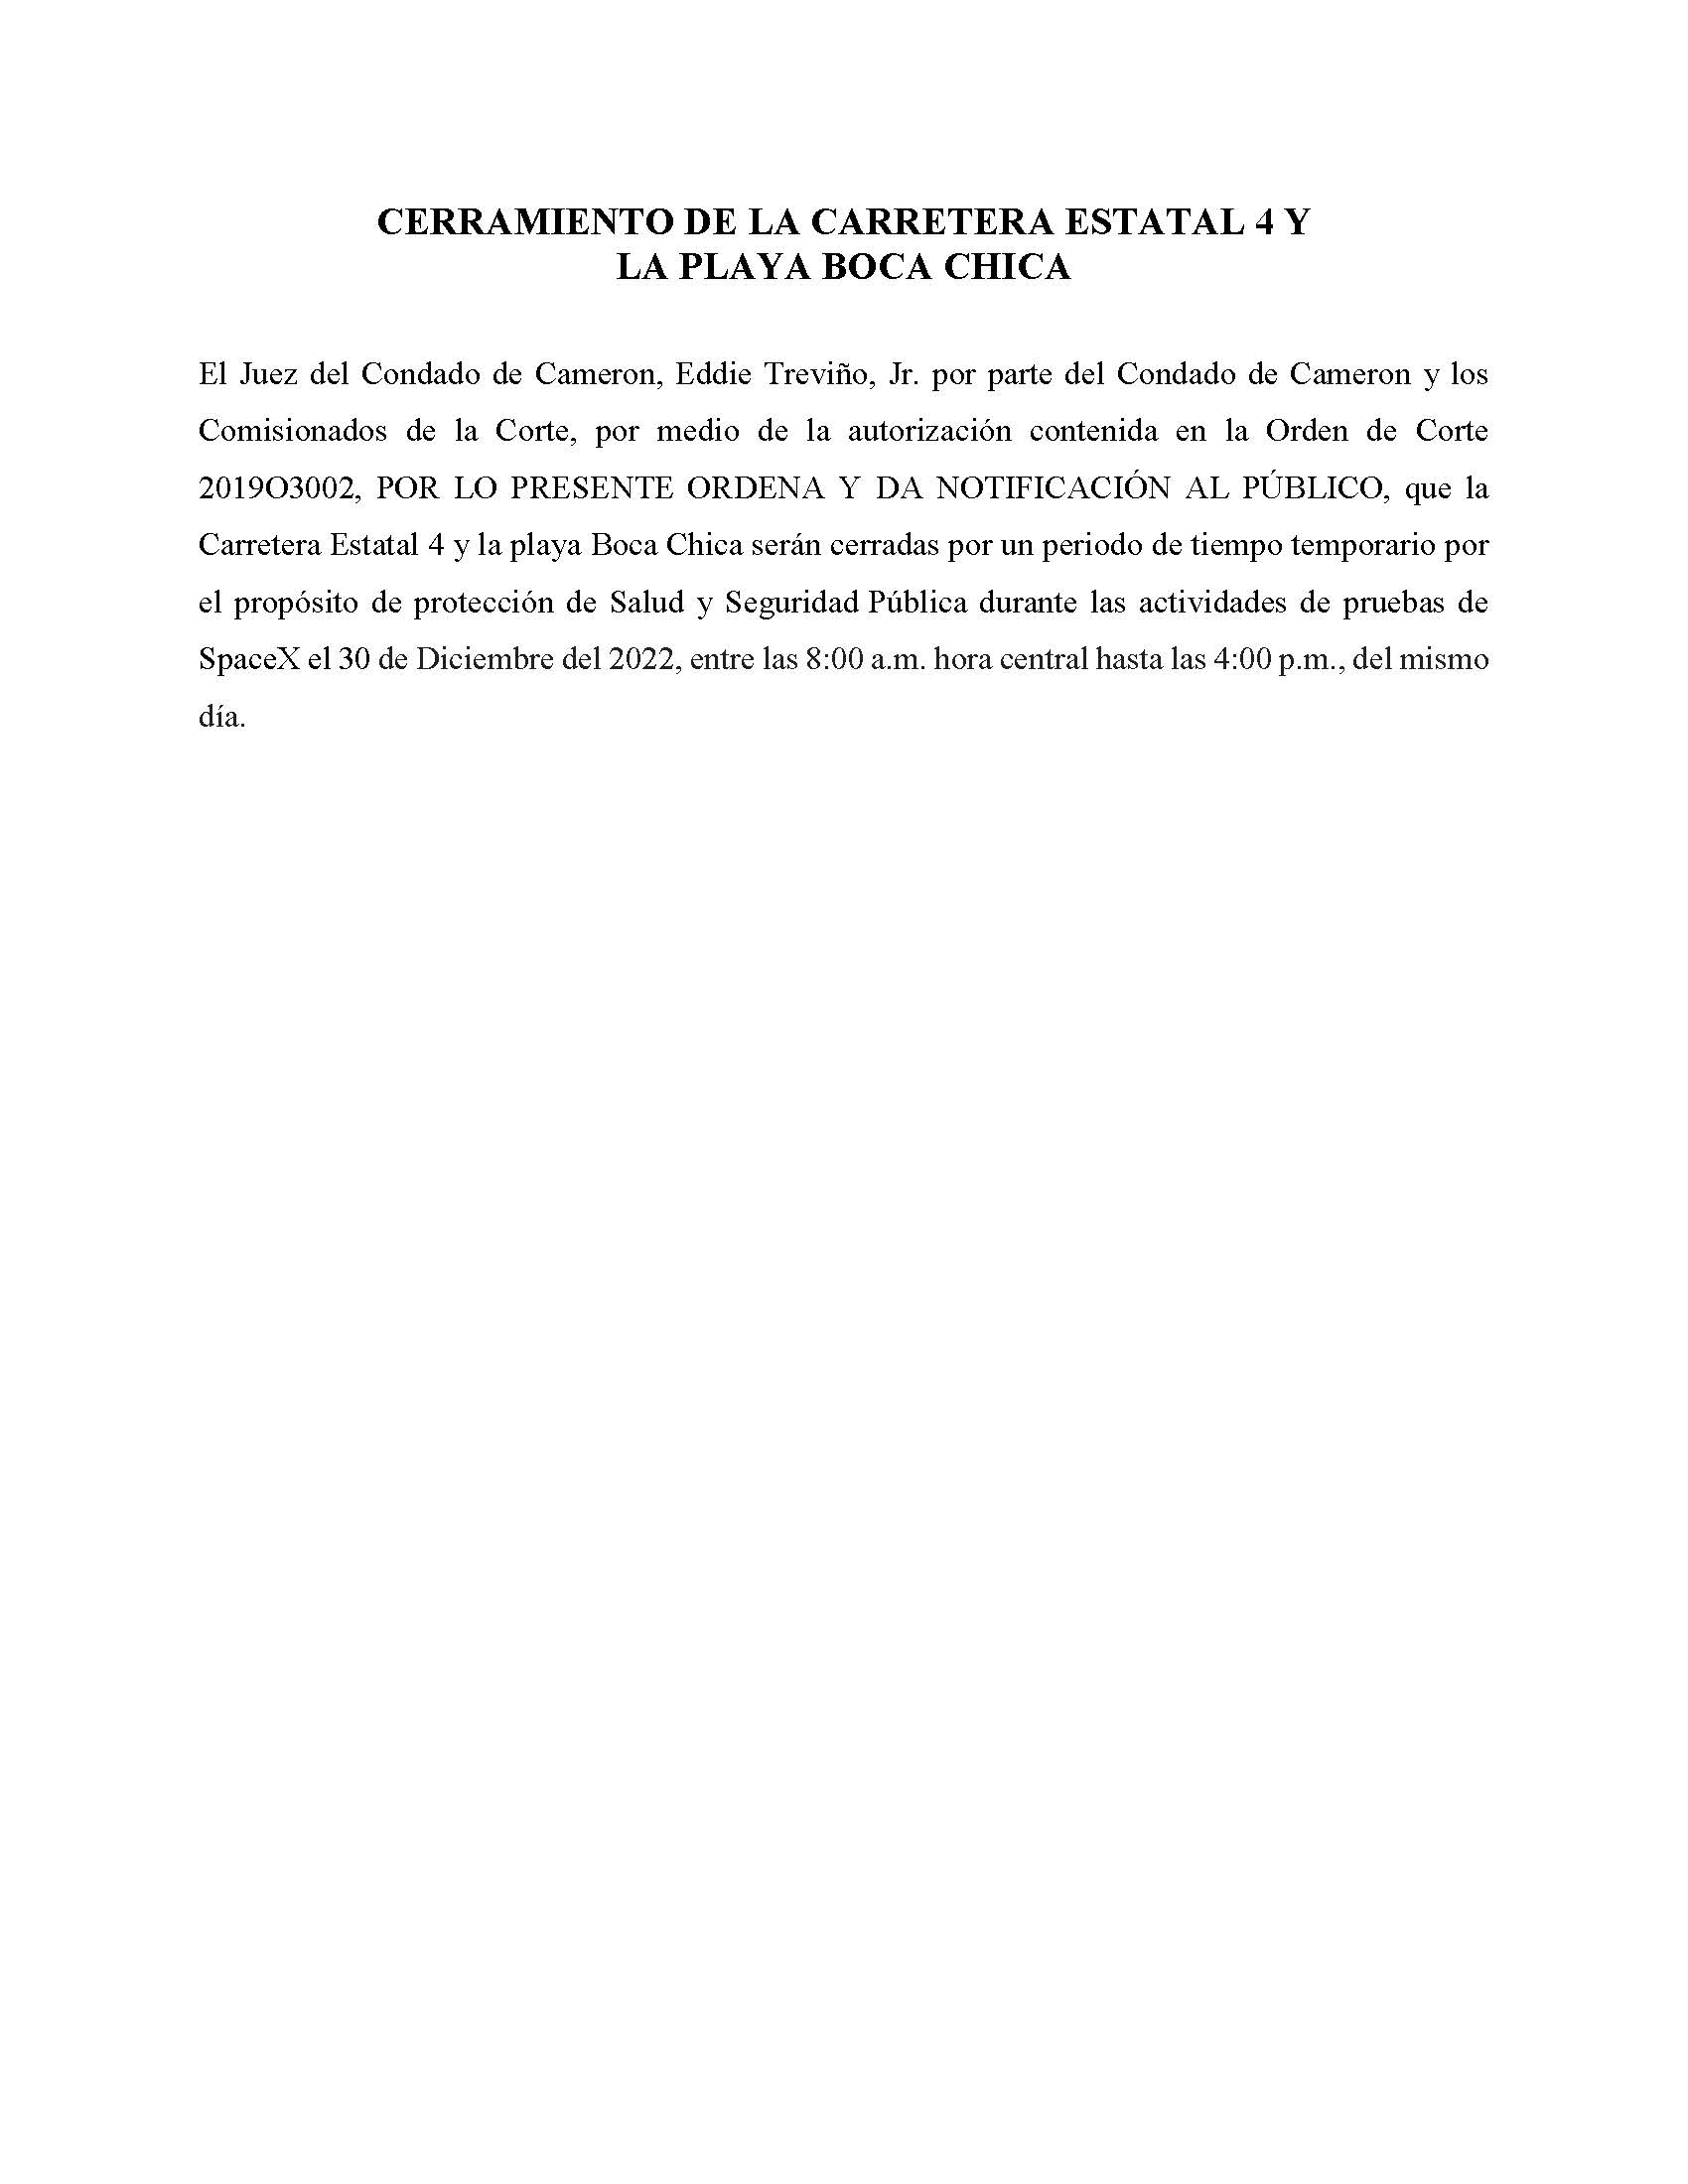 ORDER.CLOSURE OF HIGHWAY 4 Y LA PLAYA BOCA CHICA.SPANISH.12.30.2022